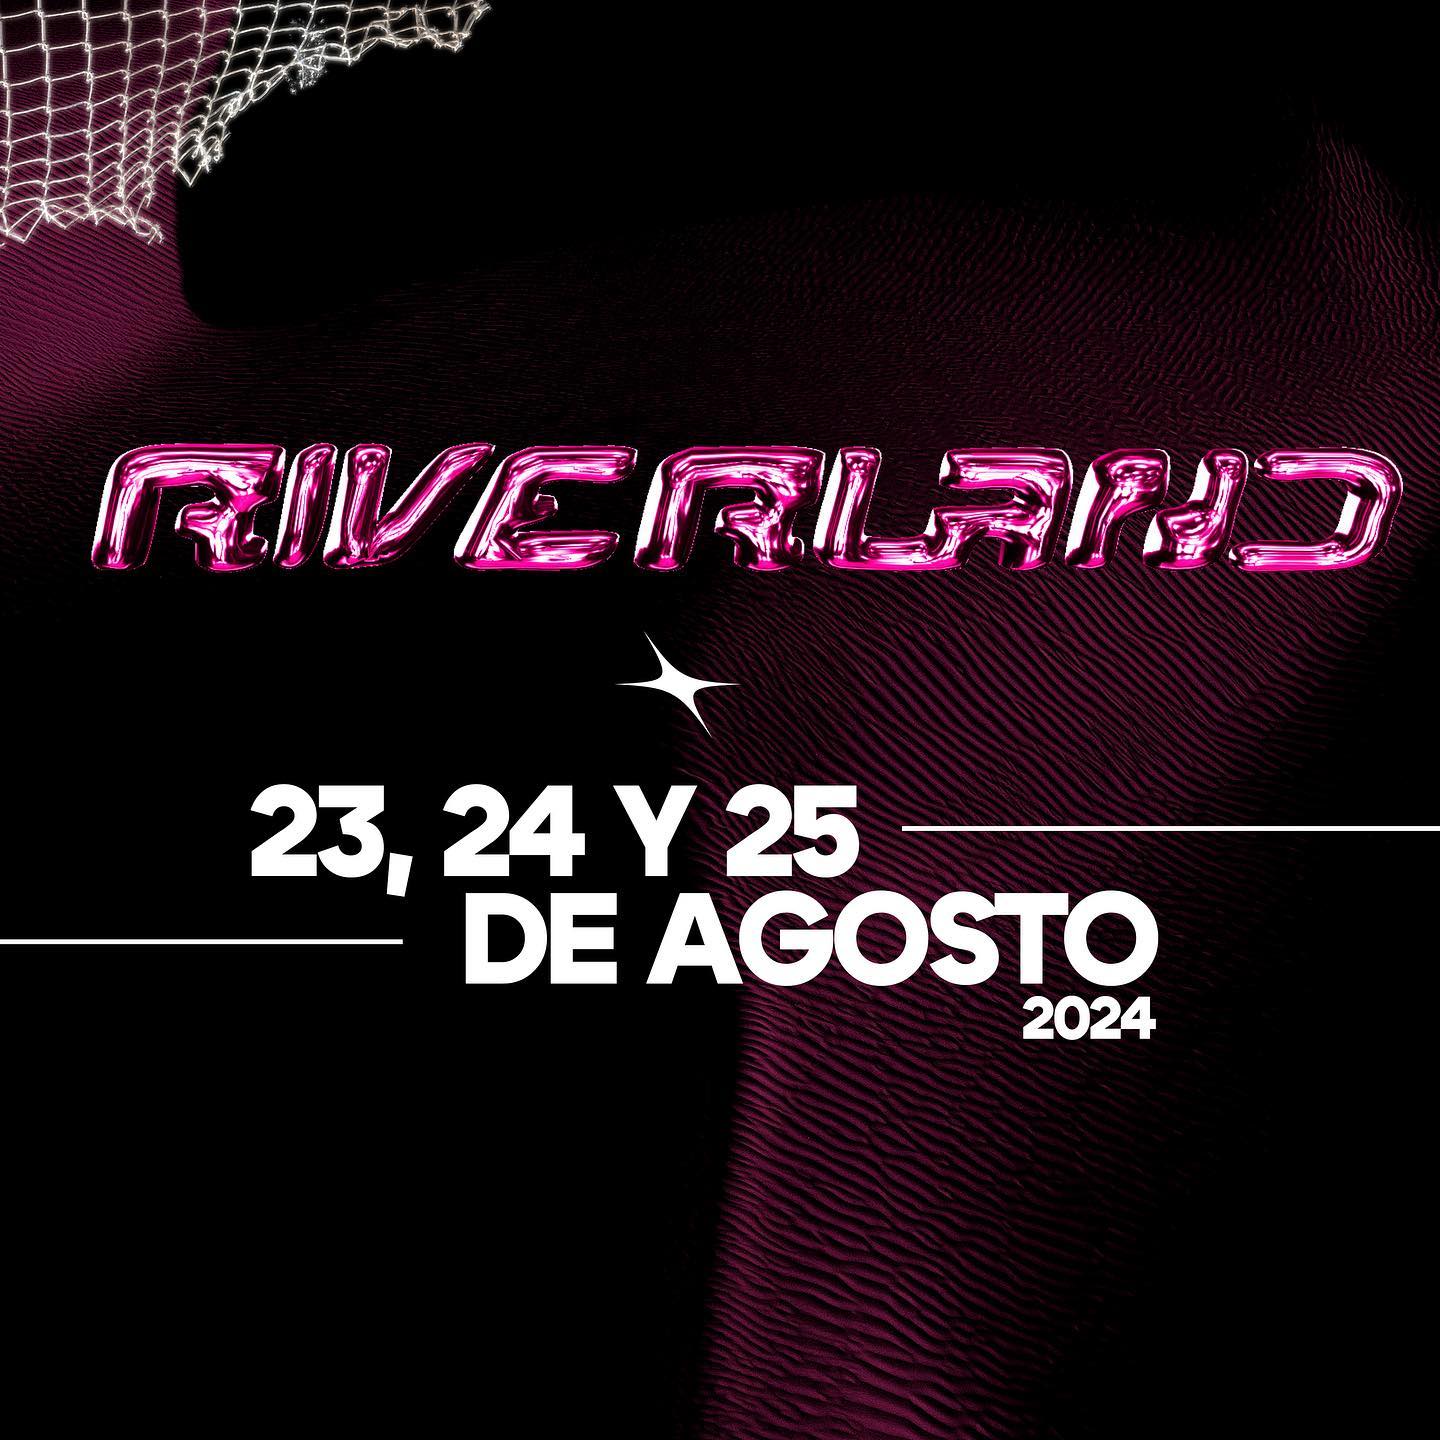 riverland fest 2024